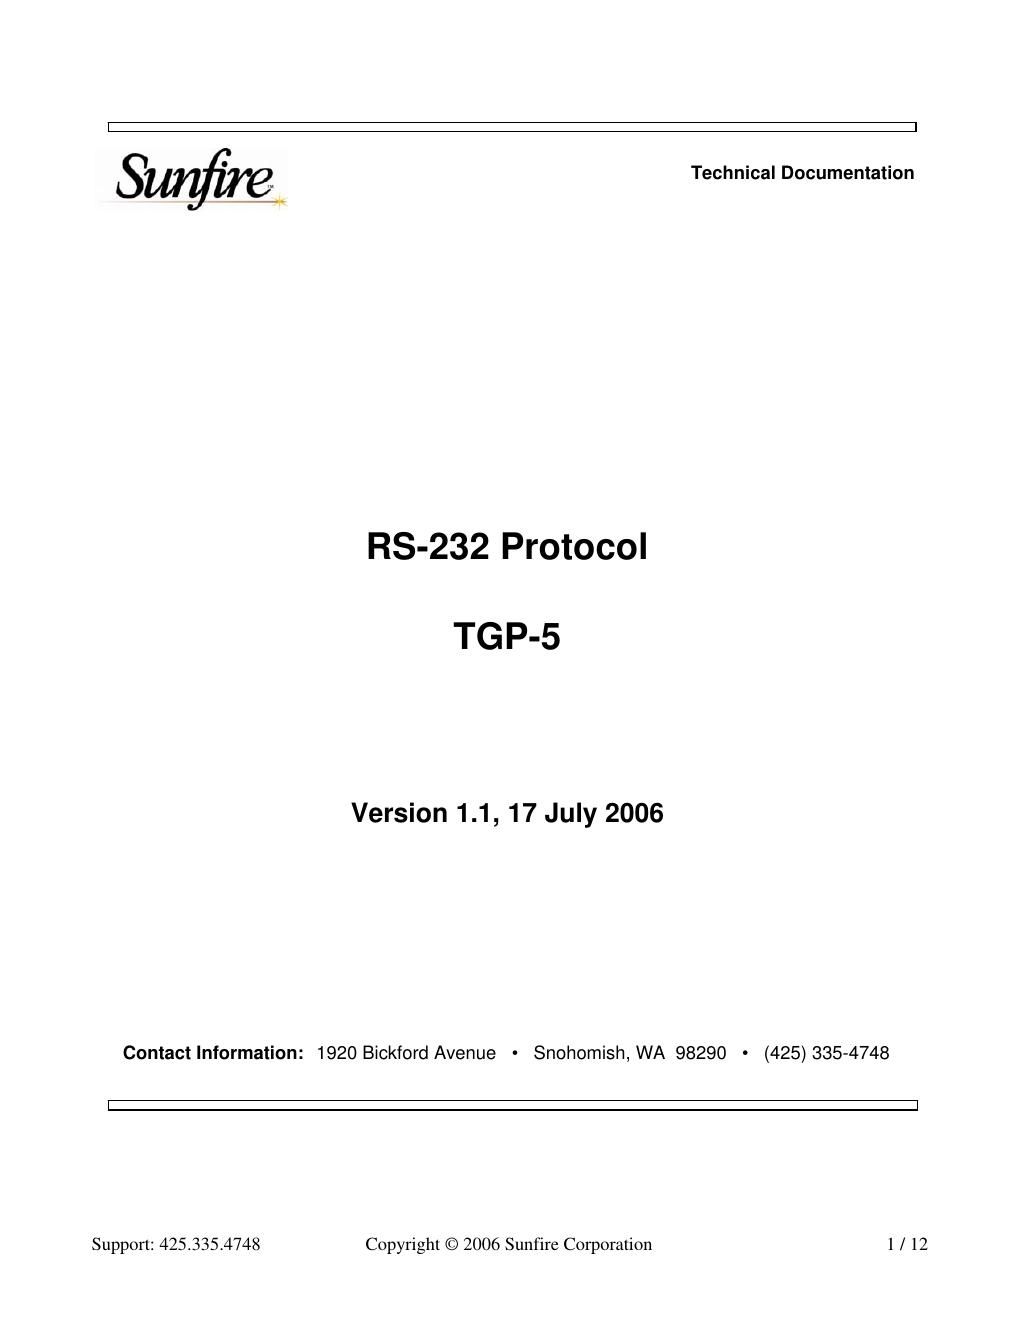 sunfire tgp 5 owners manual